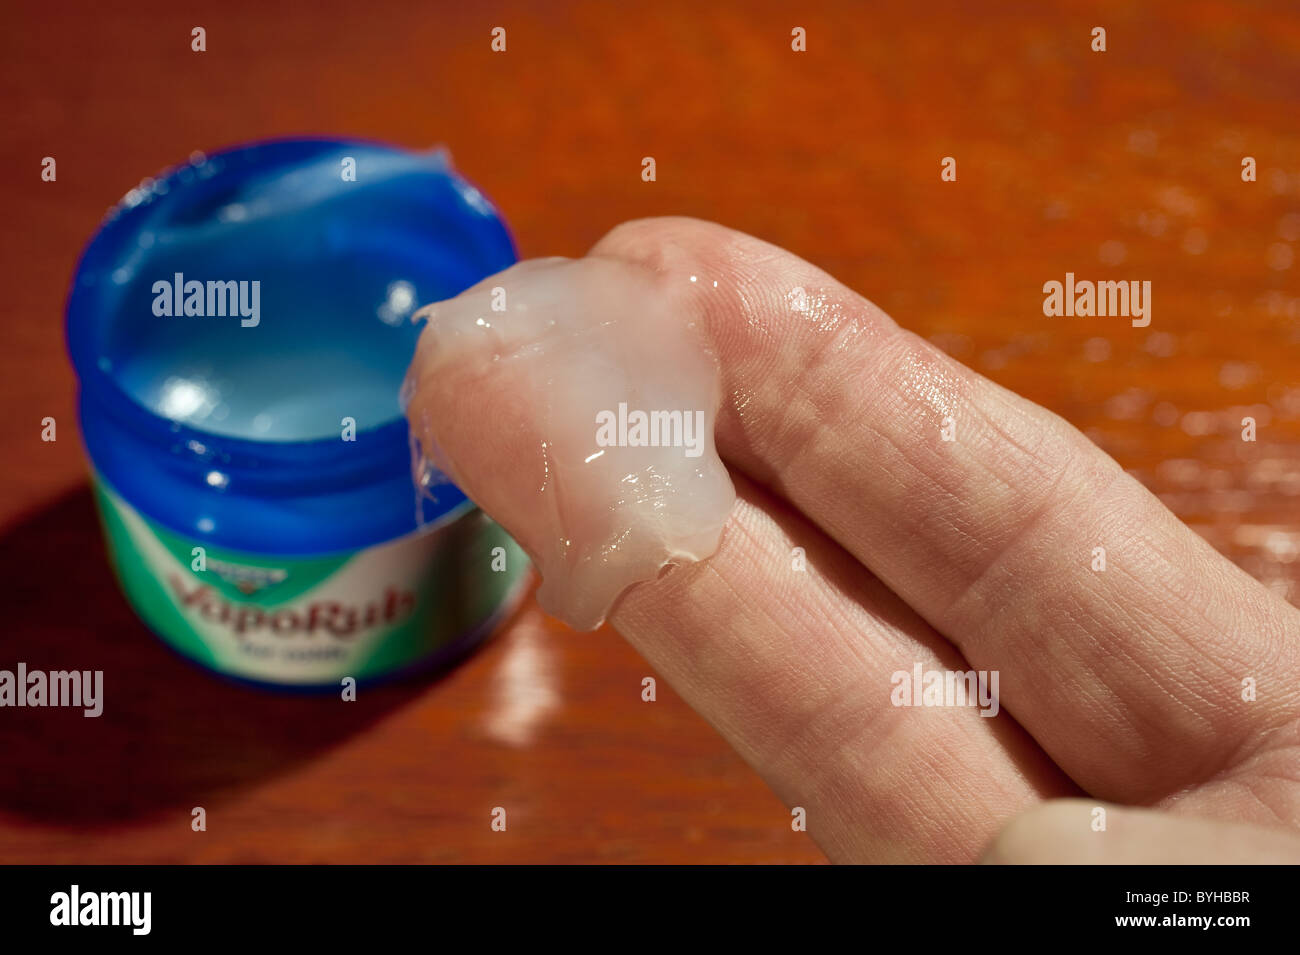 A dab of Vicks Vaporub cold remedy on a man's fingers Stock Photo